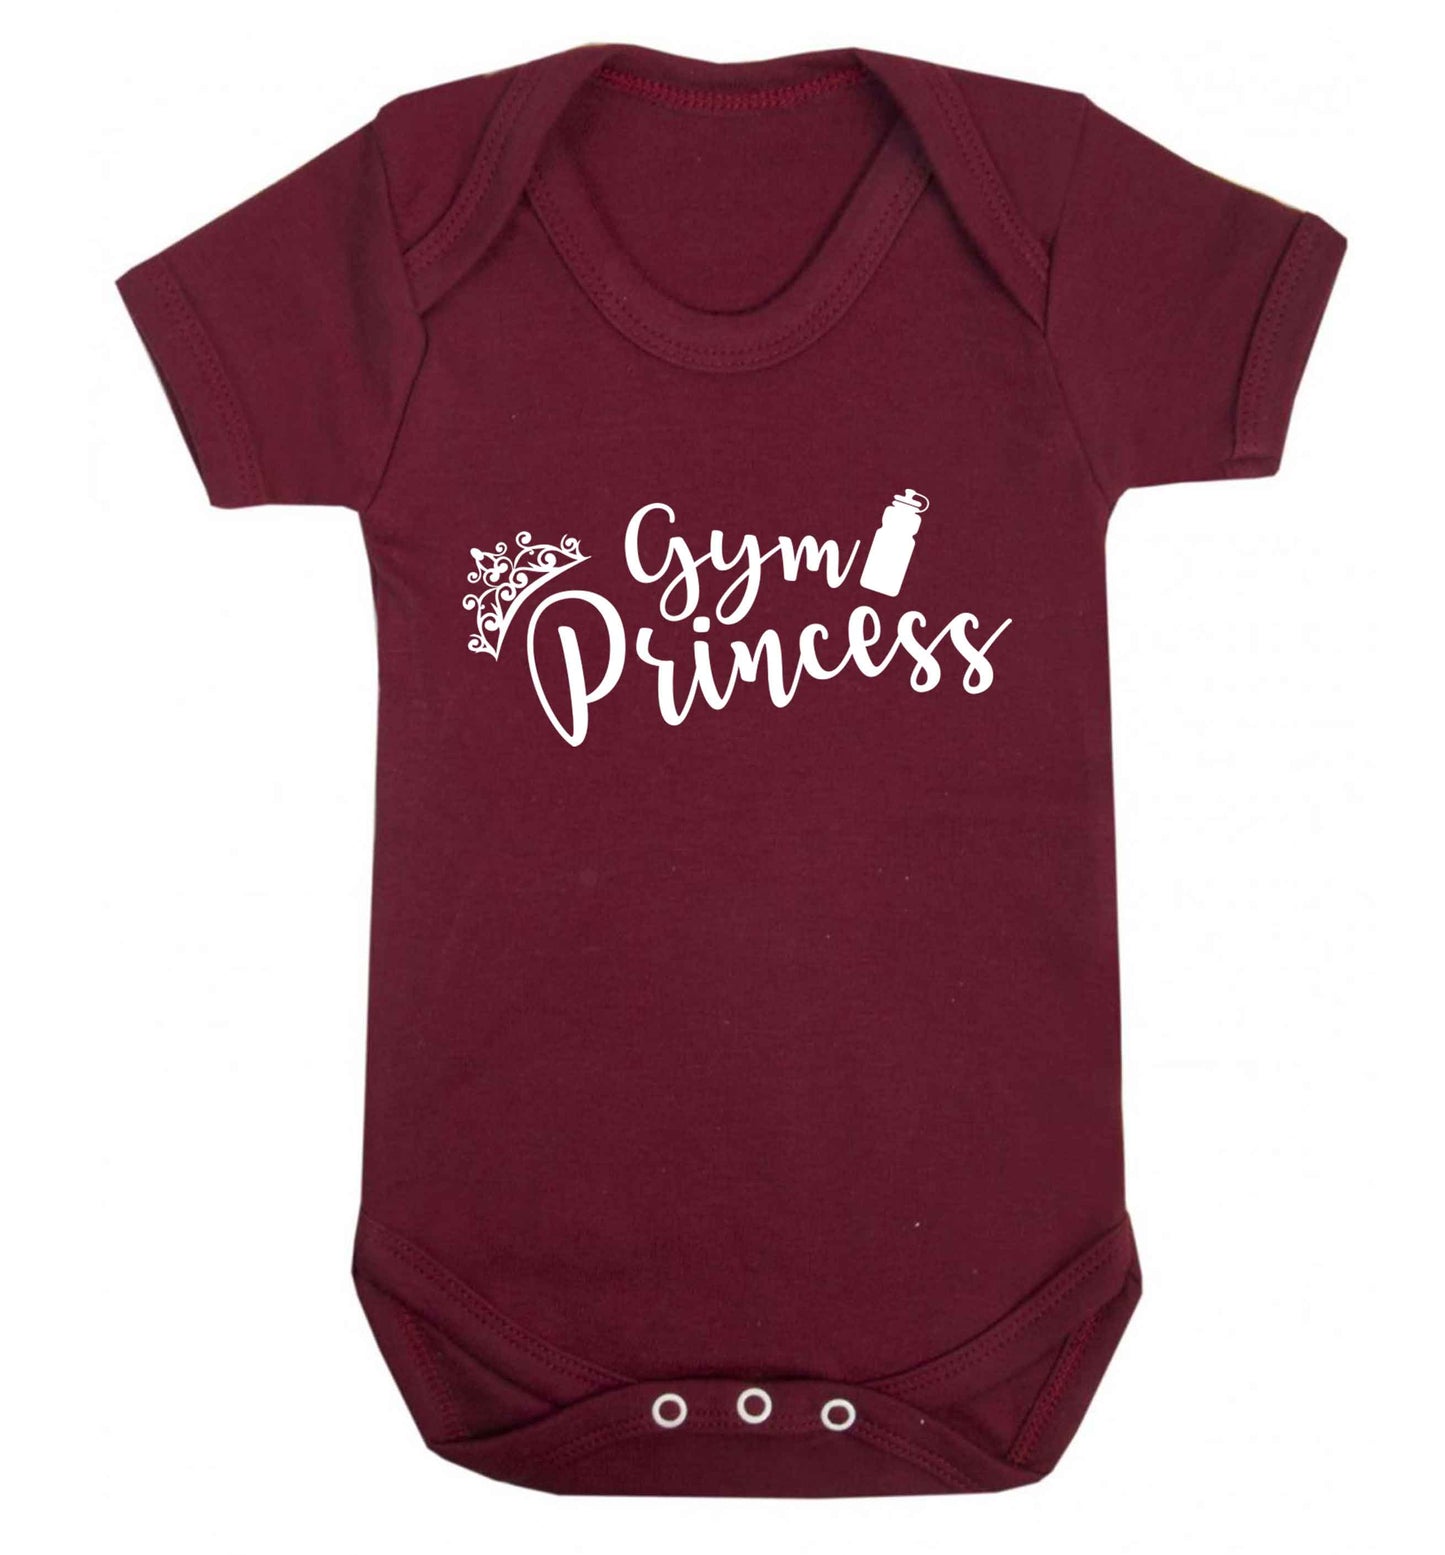 Gym princess Baby Vest maroon 18-24 months